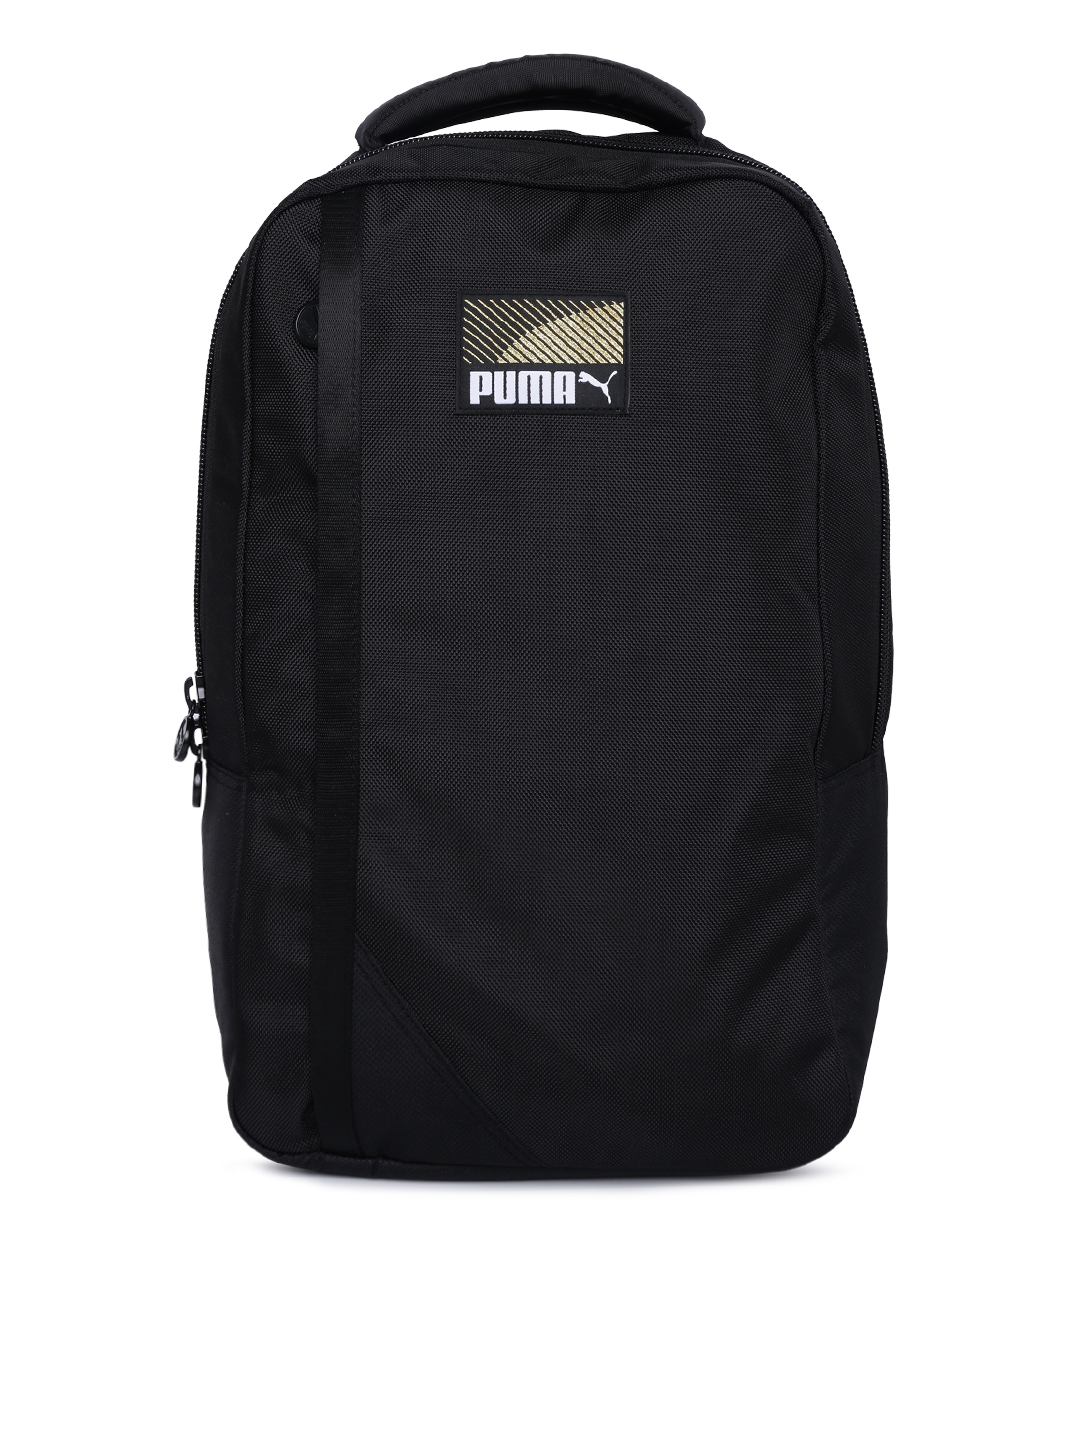 puma rsx backpack